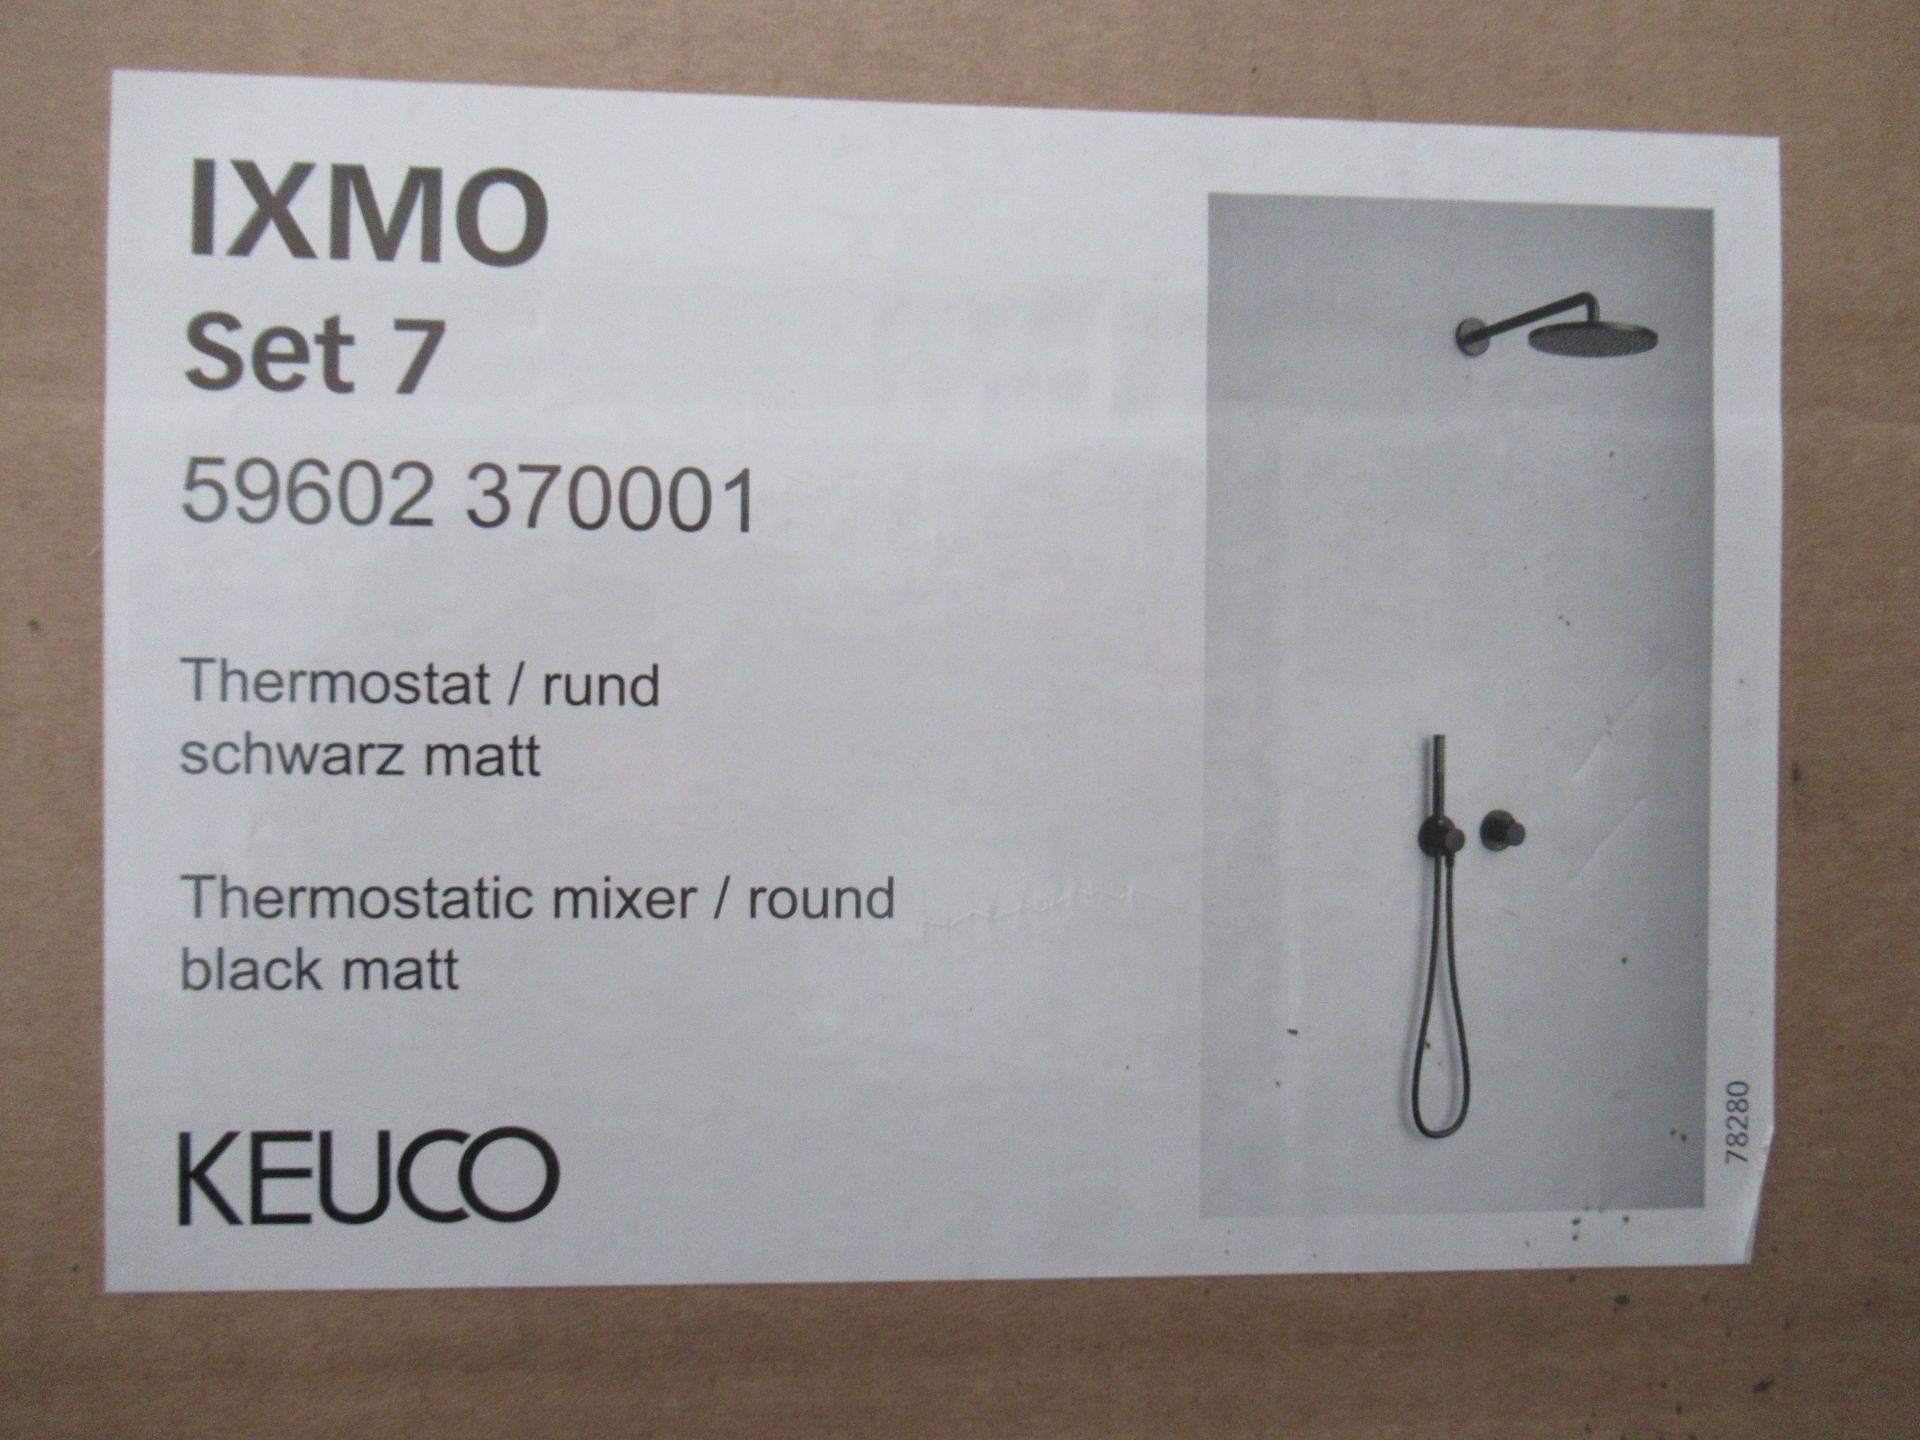 A Keuco IXMO Set 7 Thermostatic Mixer/Round Black Matt Shower Kit, P/N 59602-370001 - Image 2 of 2